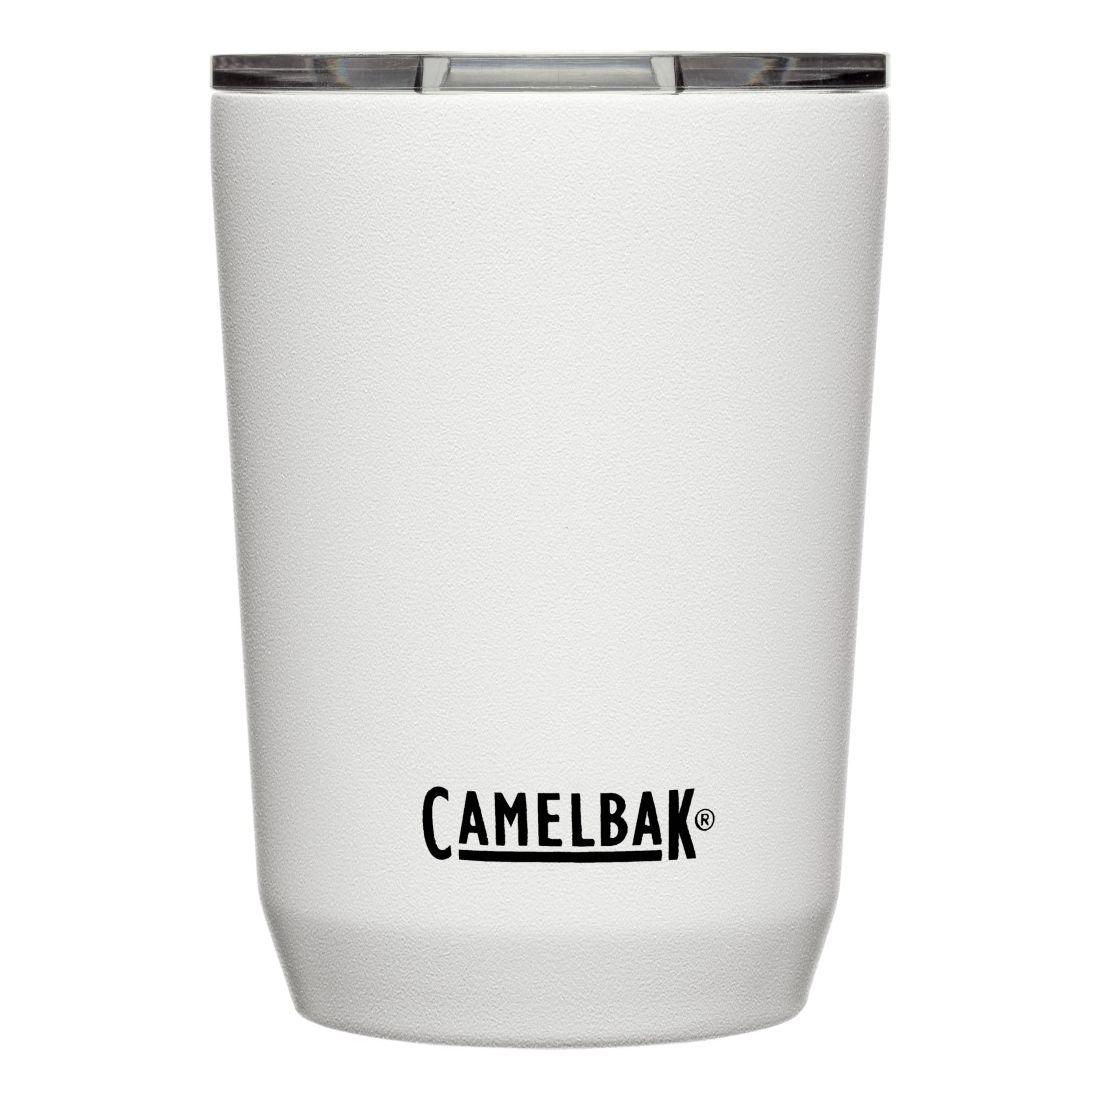 Camelbak Tumbler Stainless Steel Vacuum Insulated 12Oz White